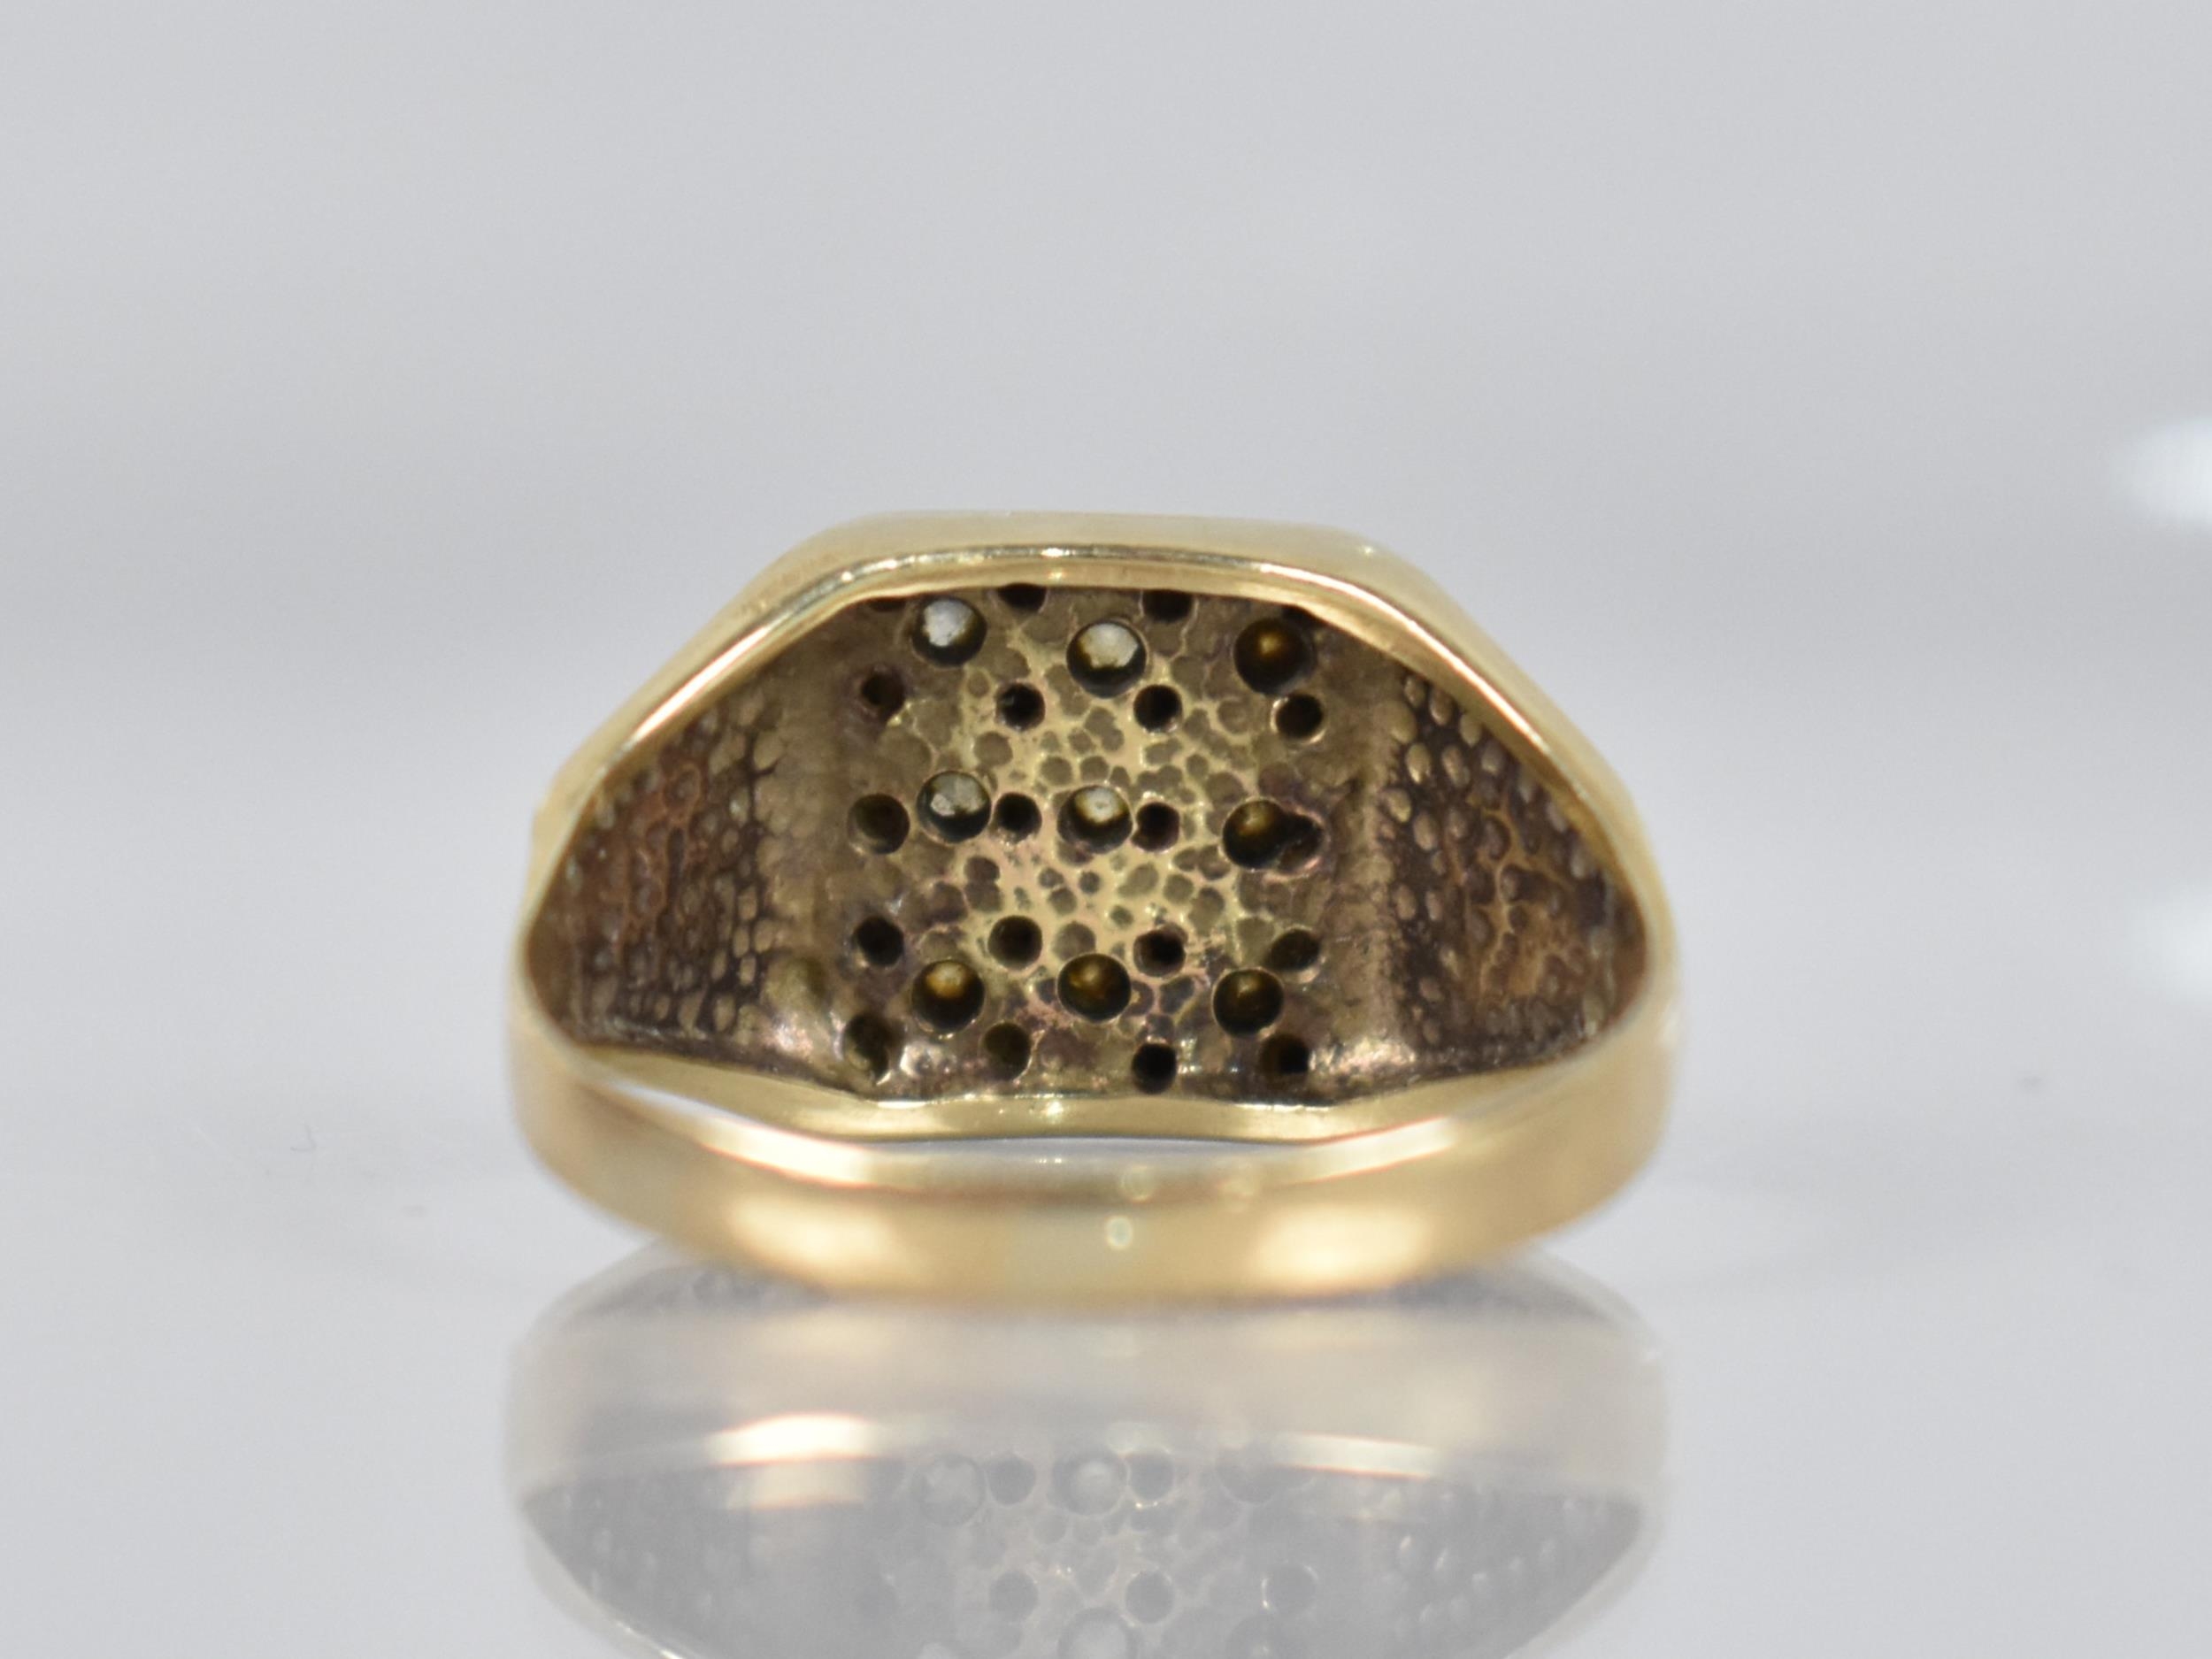 A 9ct Gold and Diamond Ring, Nine Round Brilliant Cut Stones Measuring 2.2mm Diameter Grain Set in - Image 2 of 2